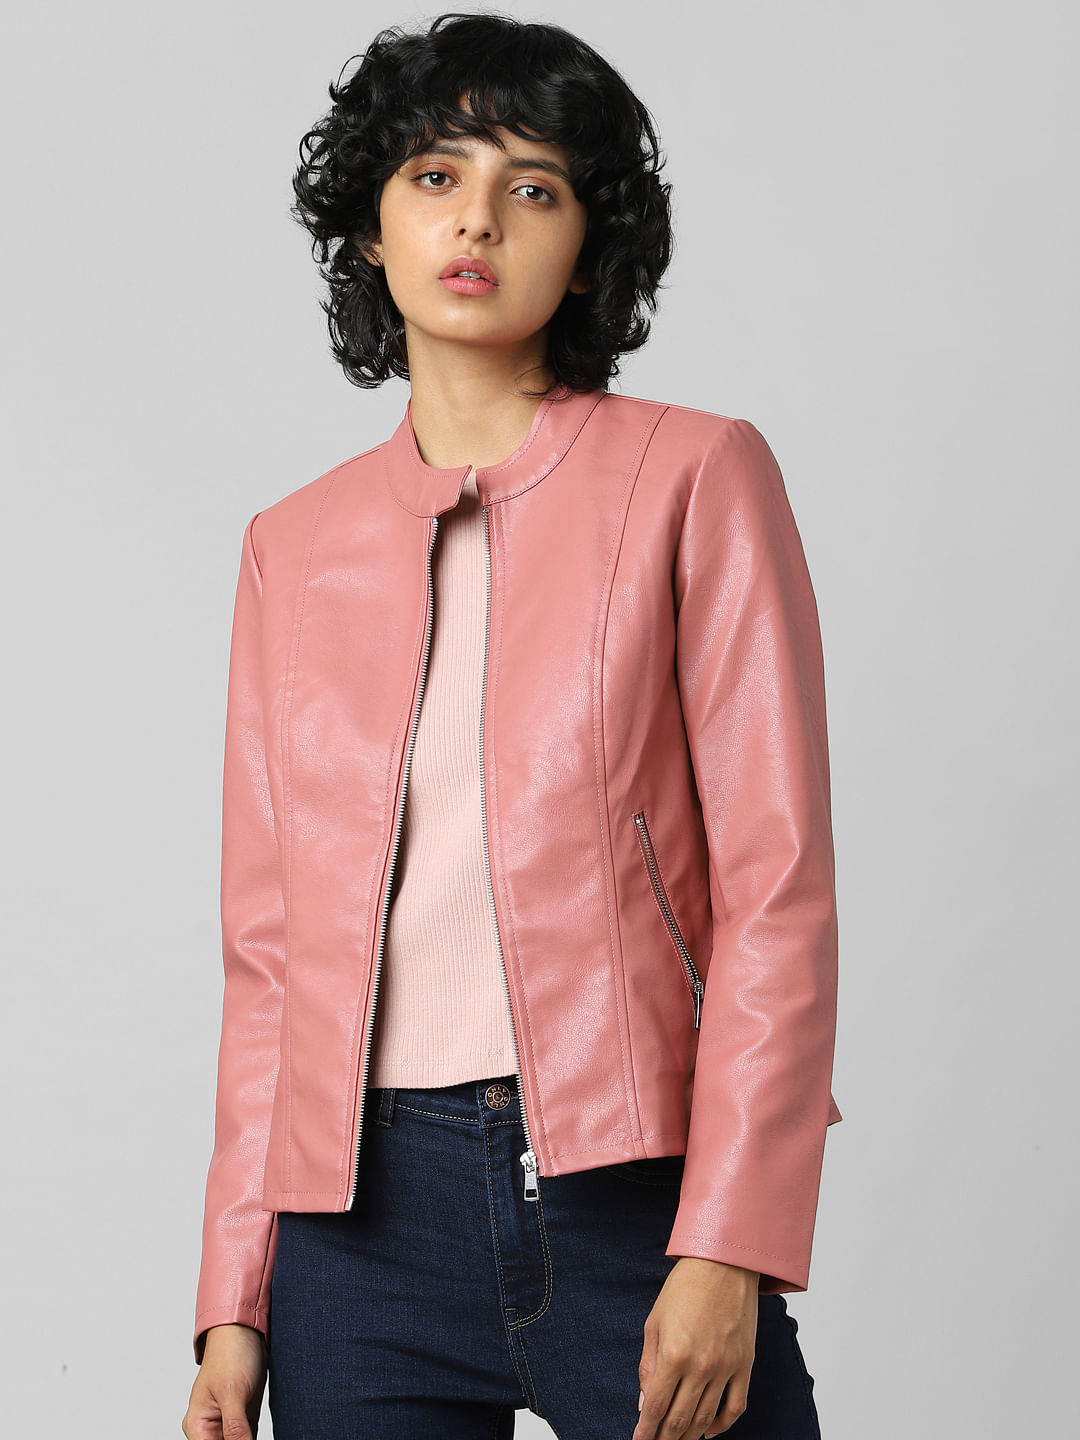 Bershka jacket WOMEN FASHION Jackets Bomber discount 86% Pink M 